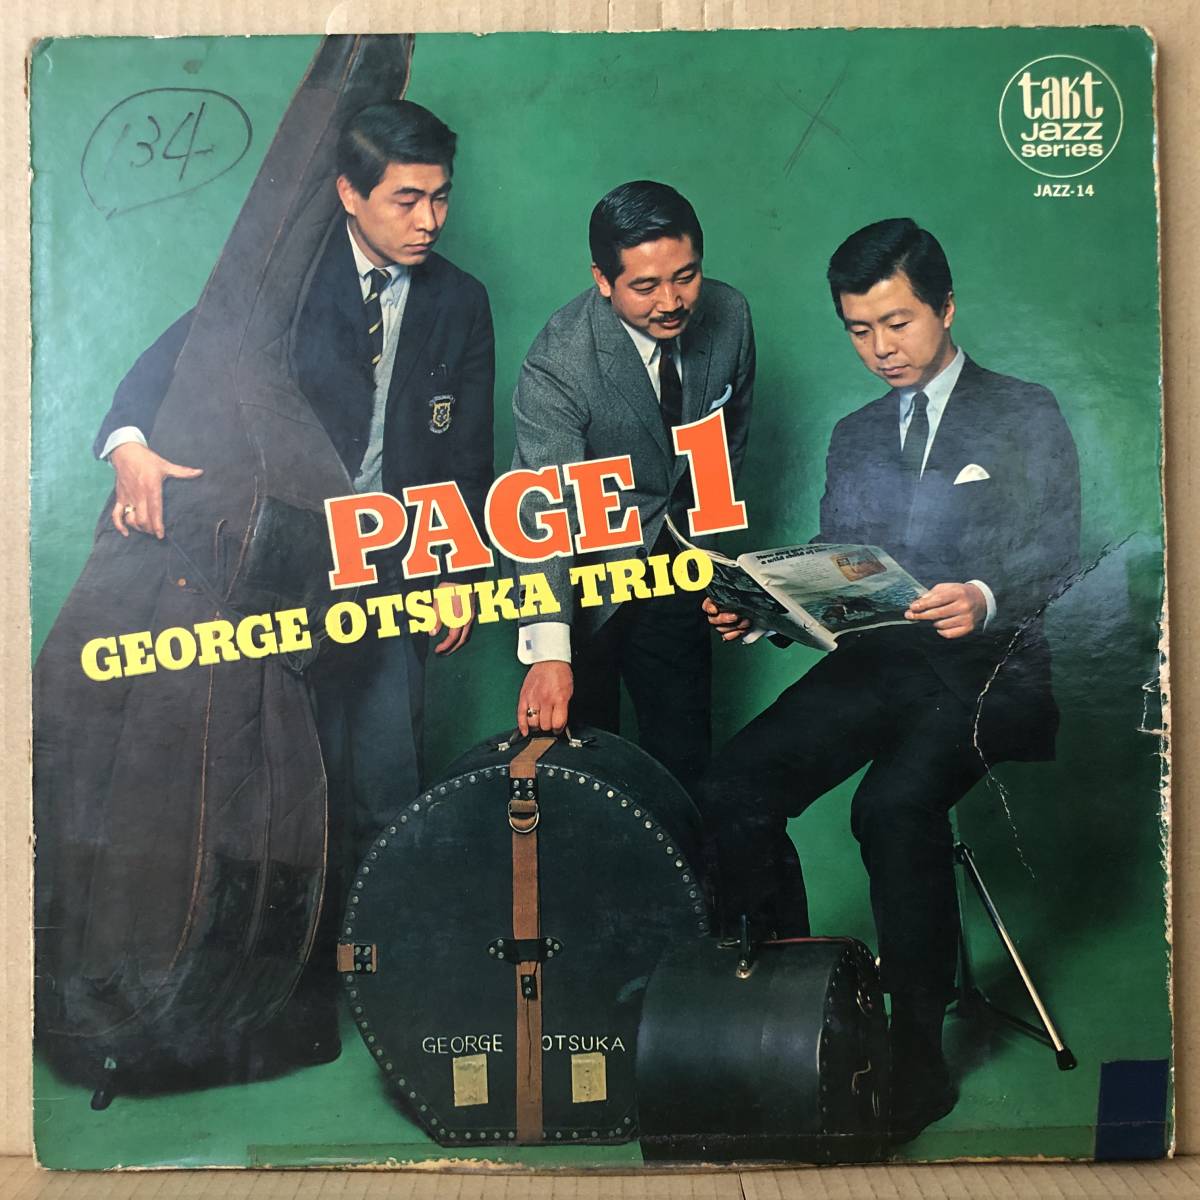 George Otsuka Trio Page 1 LP JAZZ-14 和ジャズ_画像1